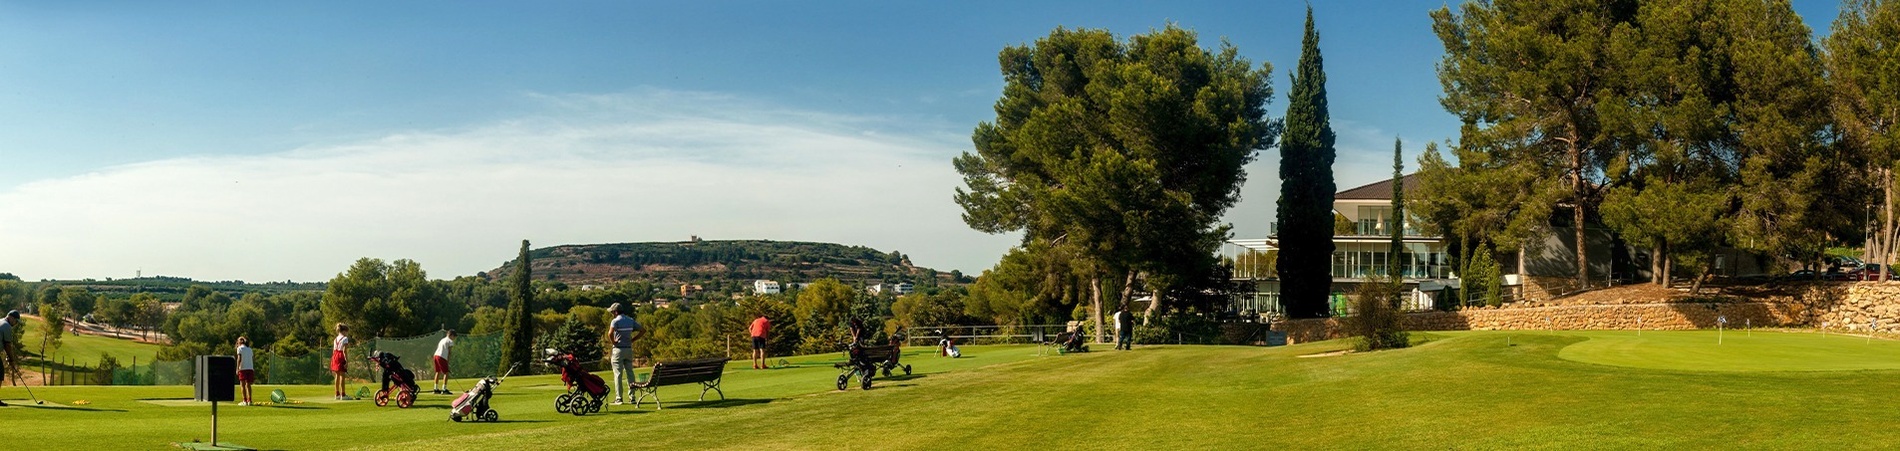 un grupo de personas está practicando golf en un campo de golf